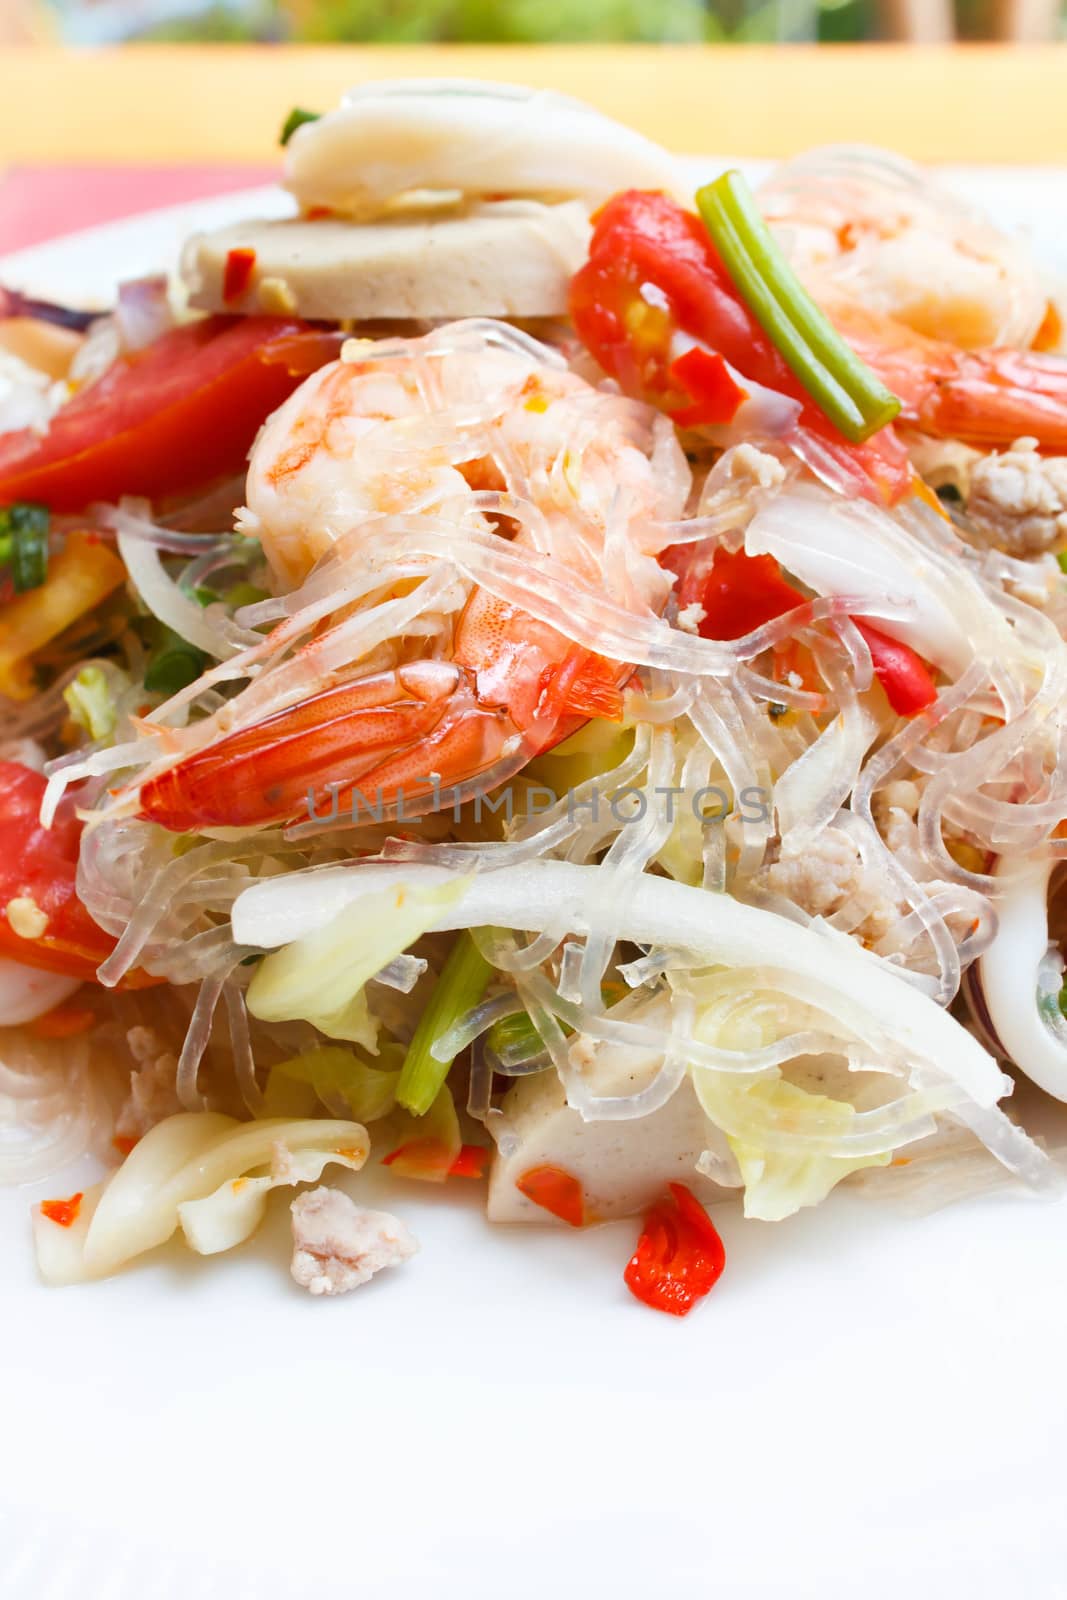 spicy noodle salad, spicy vermicelli salad
(yum woon sen), thai salad famous appetizer.